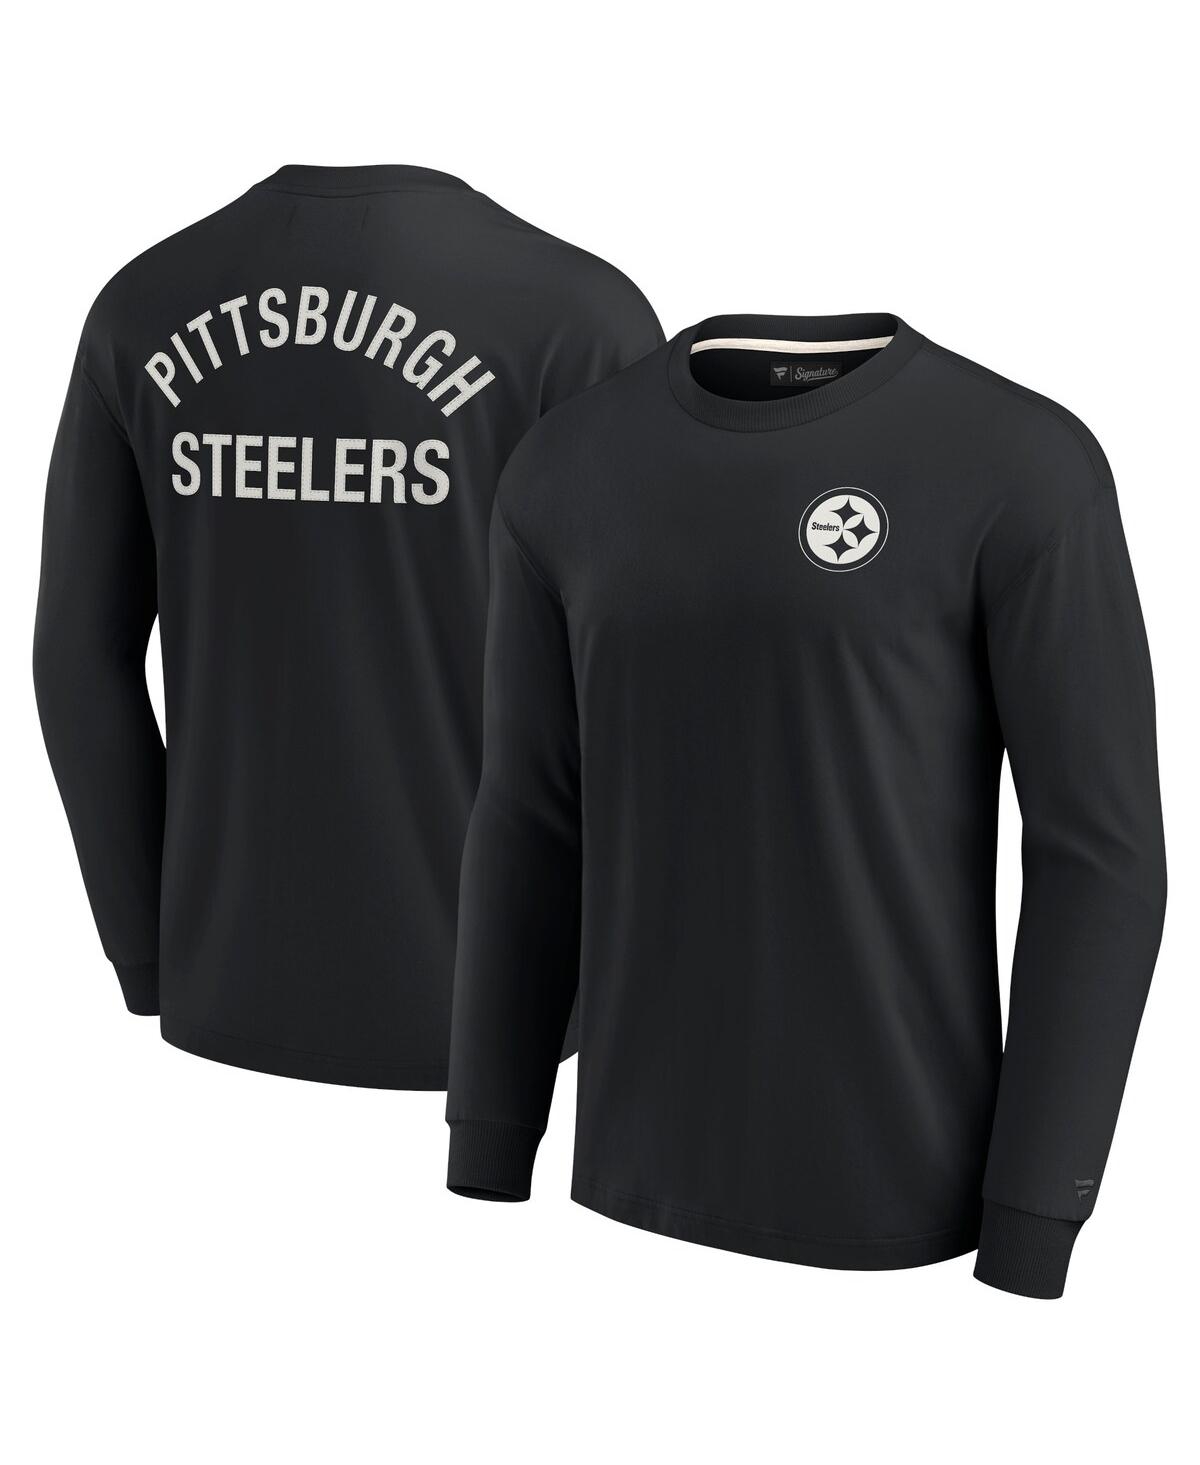 Fanatics Signature Men's And Women's  Black Pittsburgh Steelers Super Soft Long Sleeve T-shirt